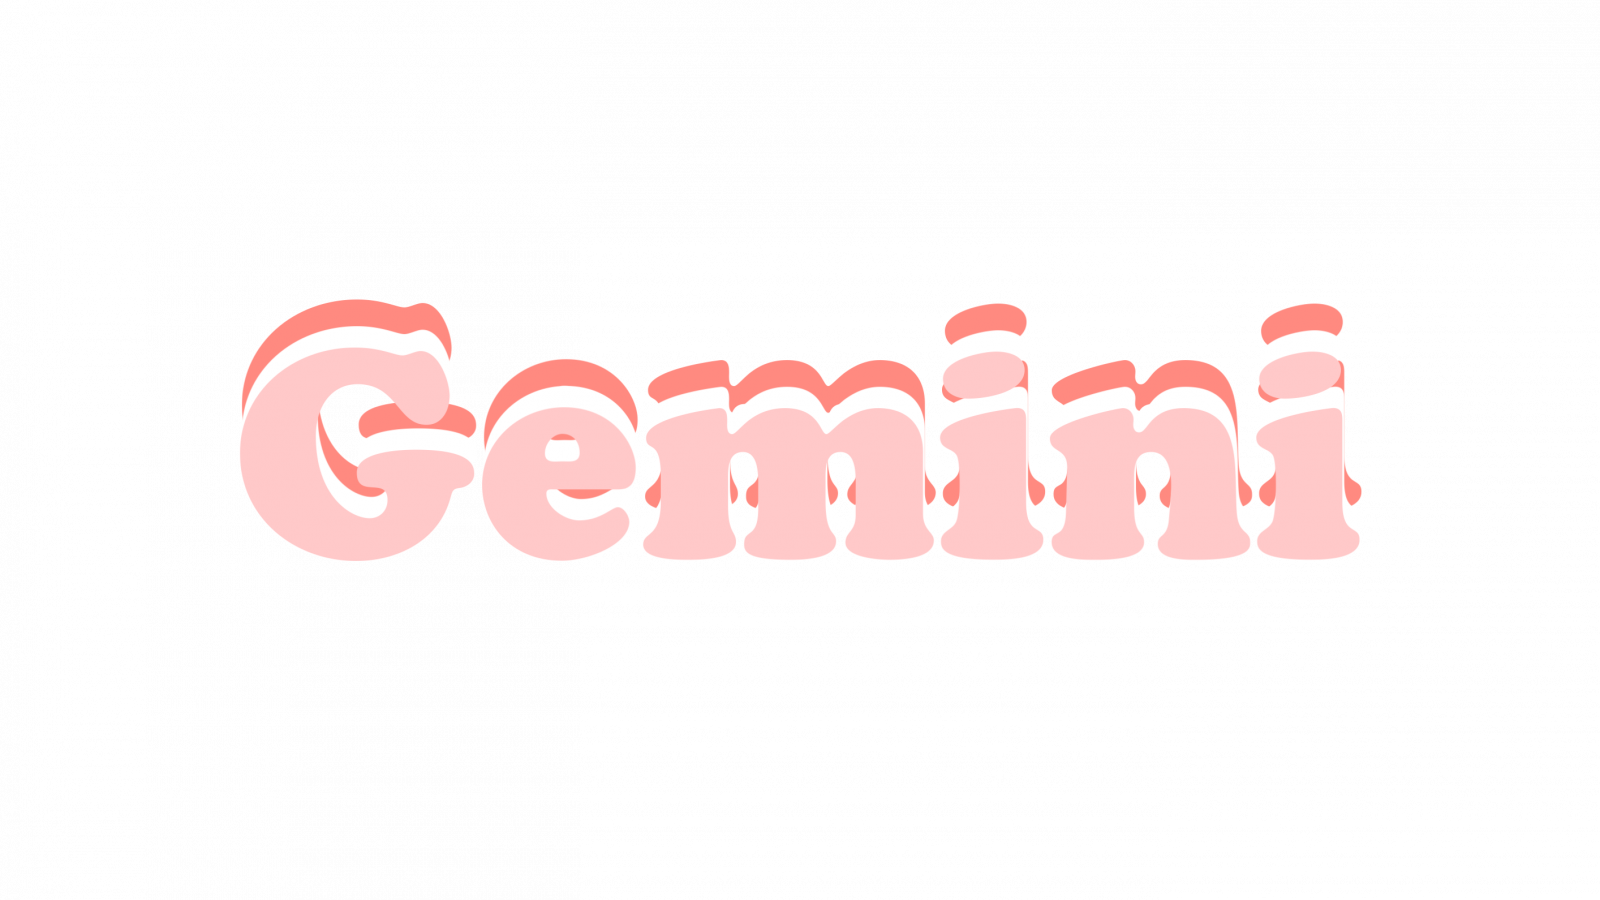 Free download The Most Edited swag Picsart [2828x2828] for your Desktop, Mobile & Tablet. Explore Preppy Gemini Wallpaper. Preppy Wallpaper, Gemini Wallpaper, Cool Gemini Wallpaper